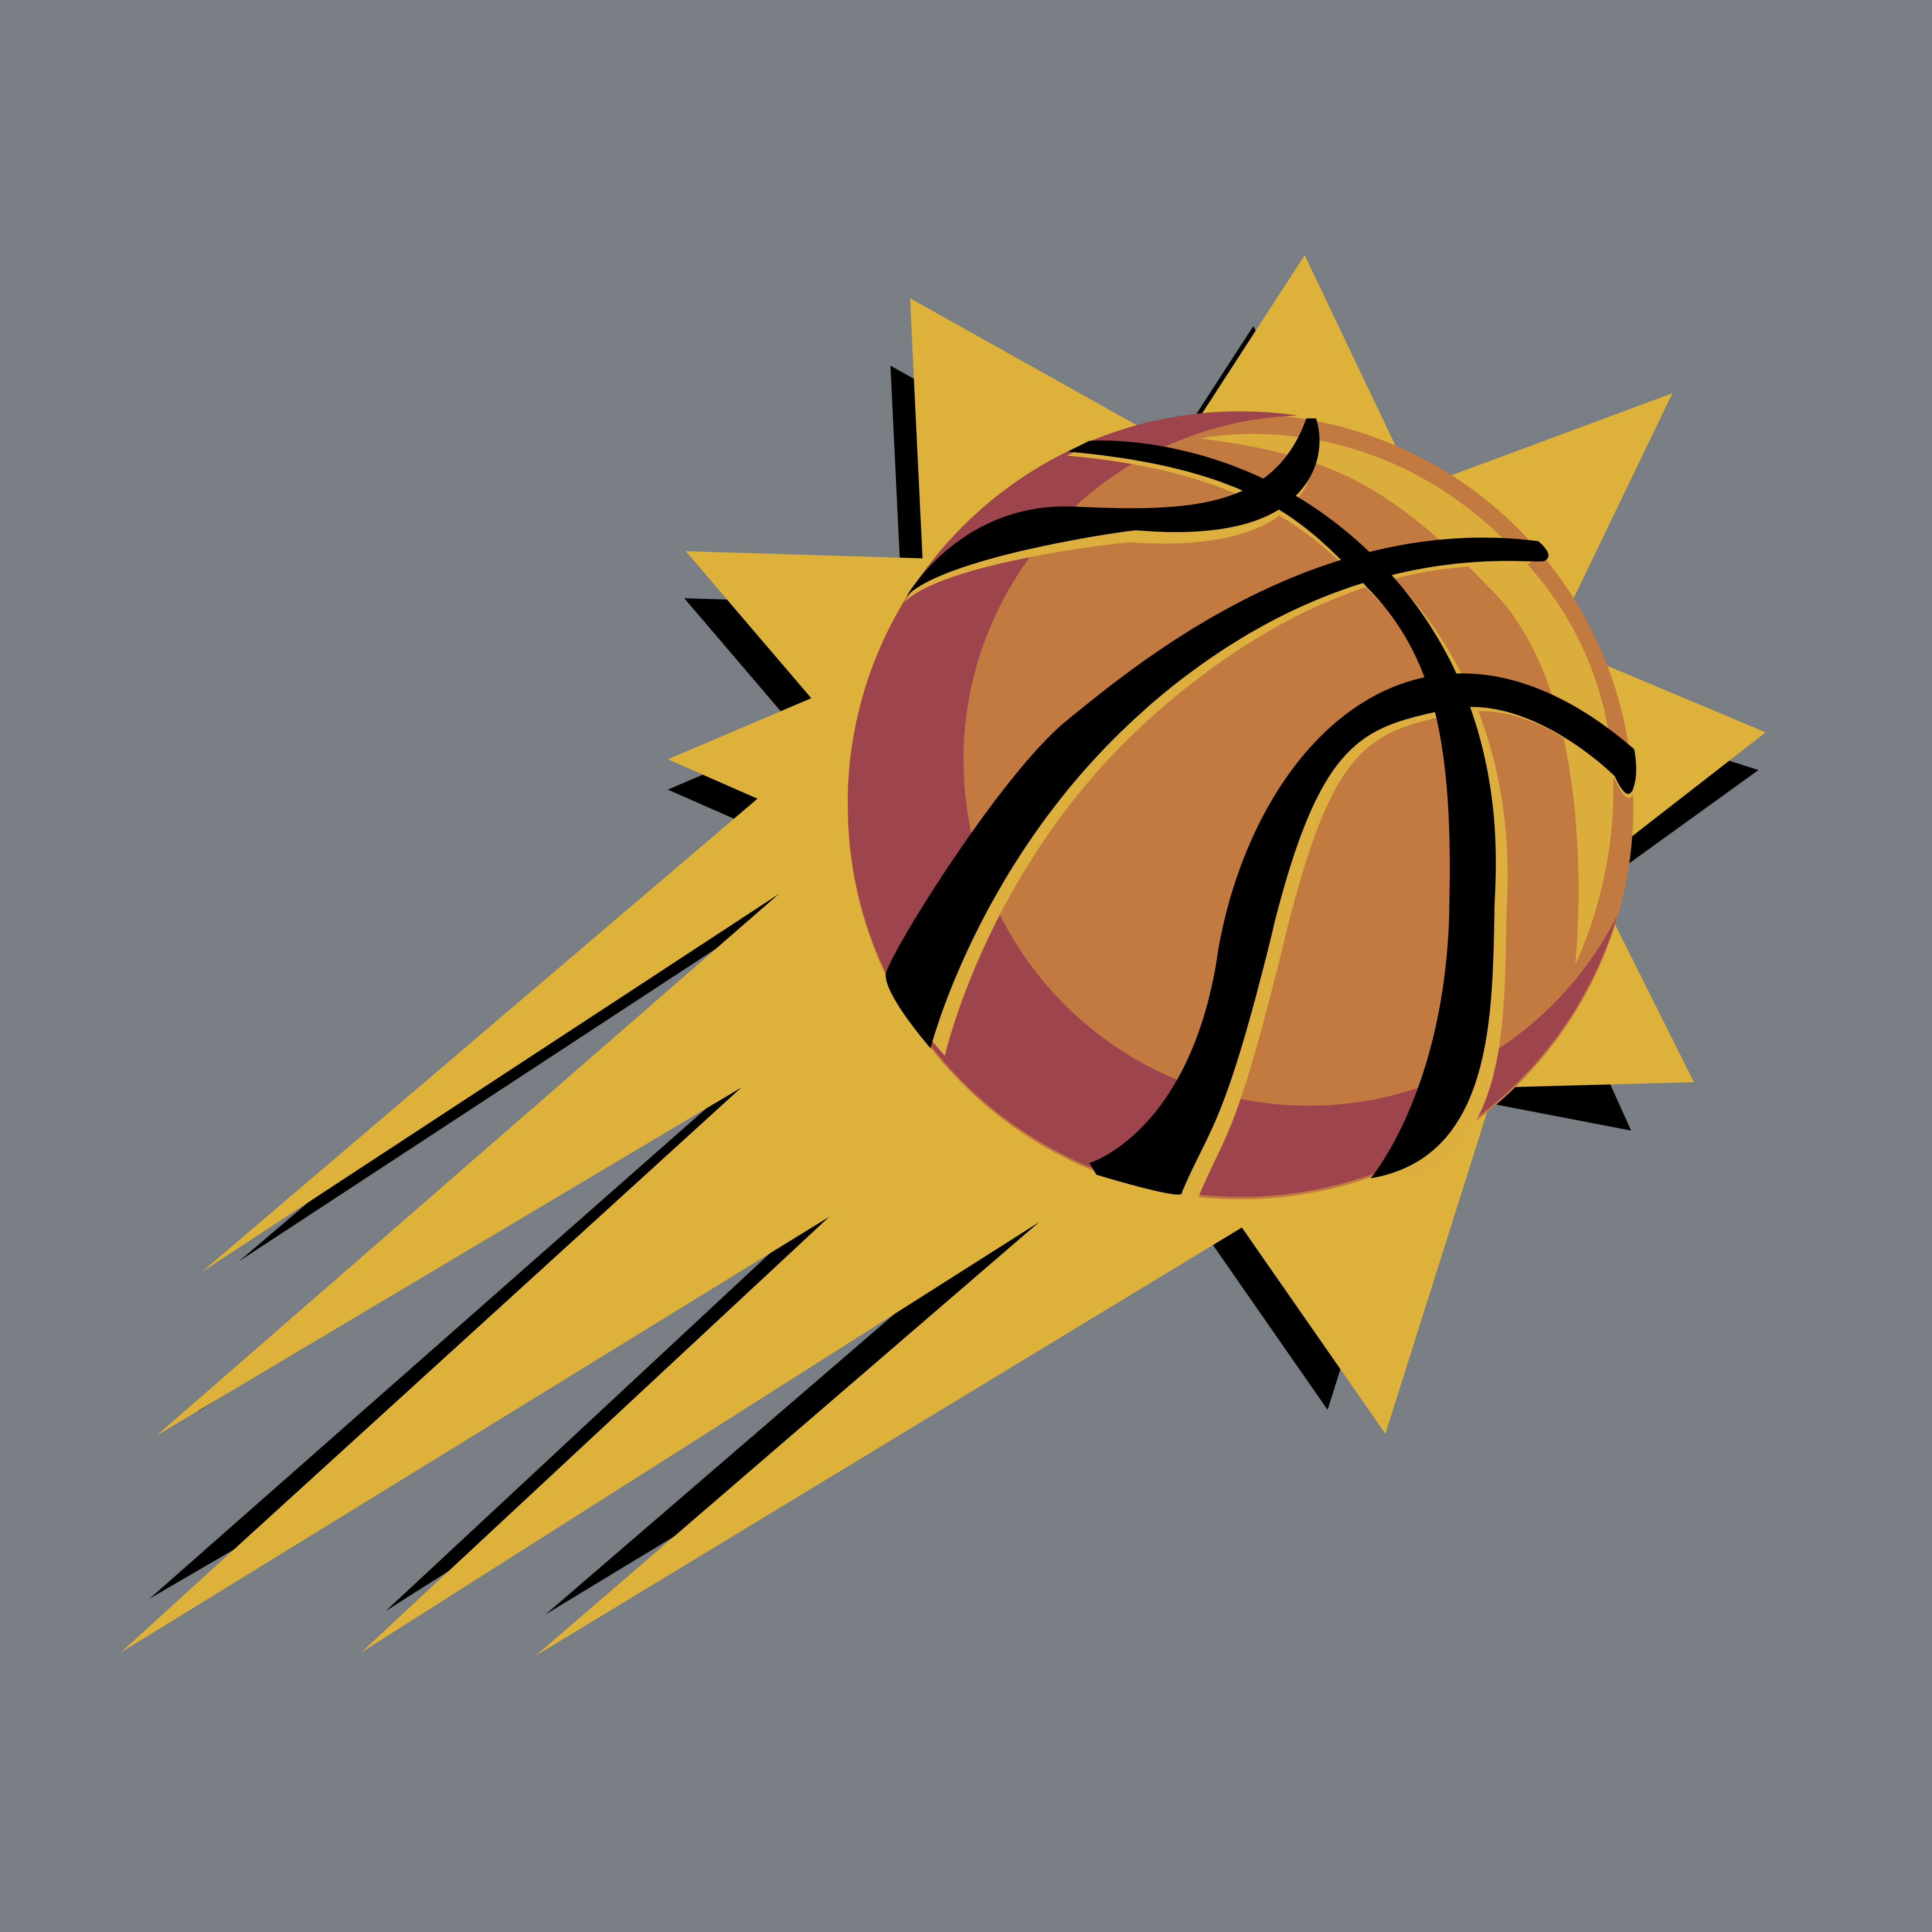 Phoenix Suns SVG